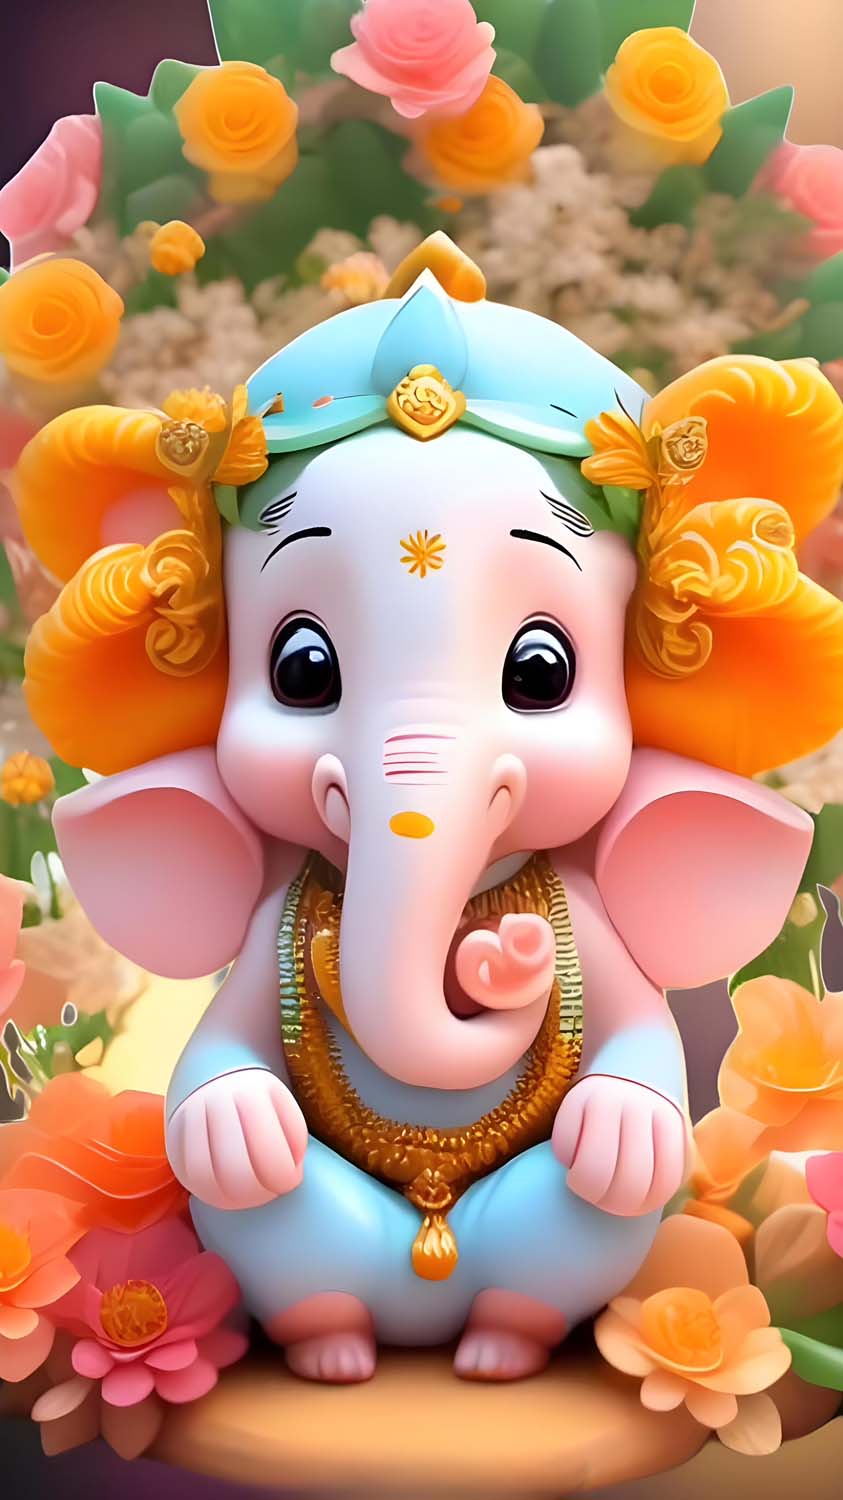 Cute Ganesha iPhone Wallpaper 4K - iPhone Wallpapers